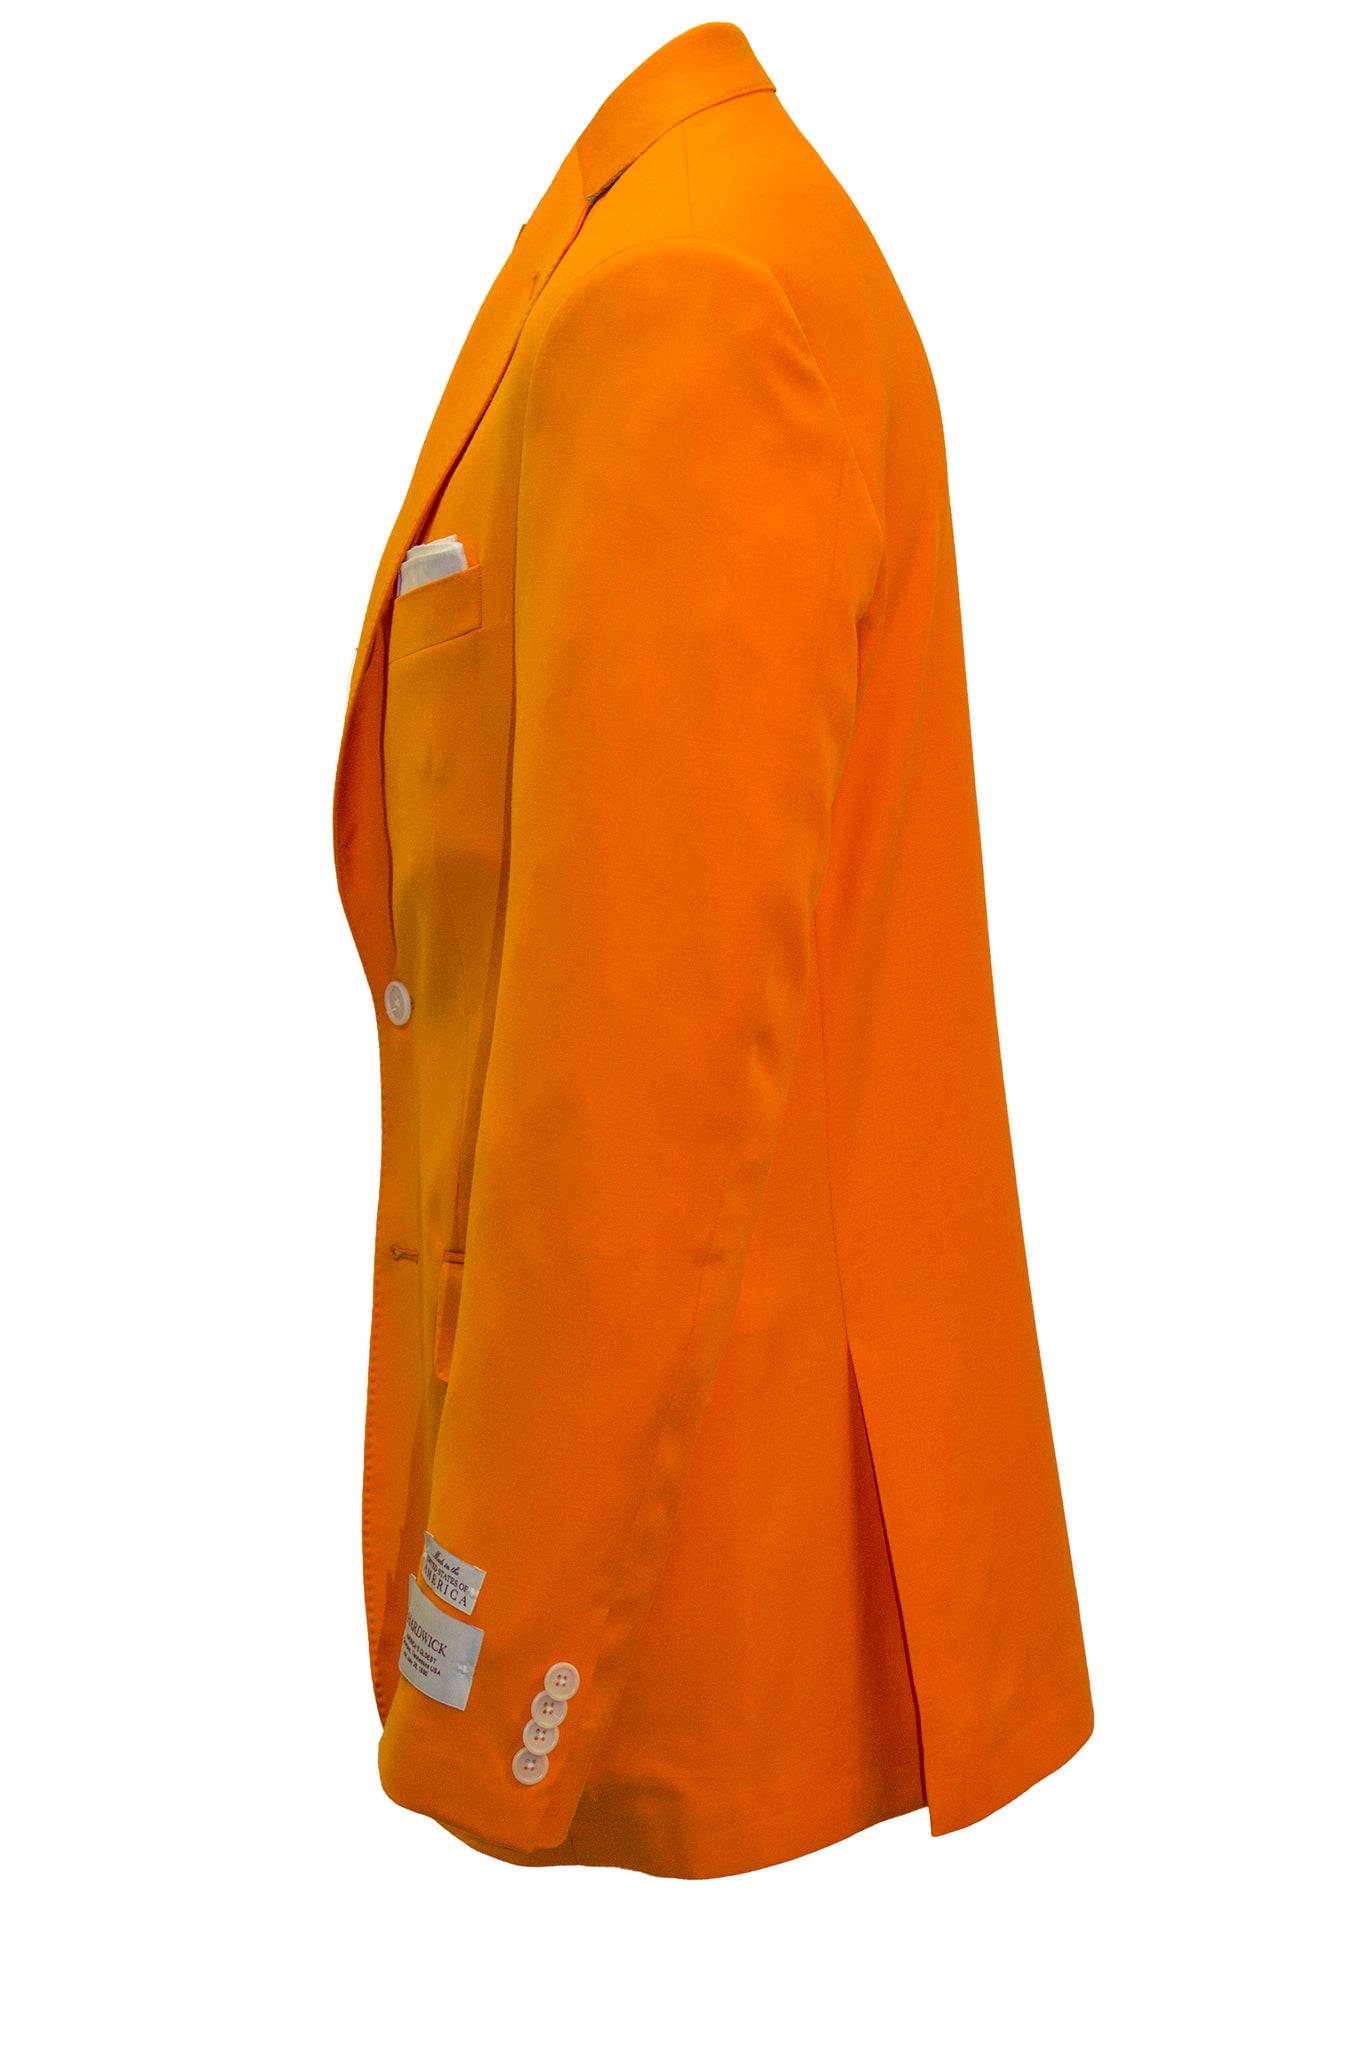 Men's Modern Fit Volunteer Orange Wool Blazer -  Hardwick.com